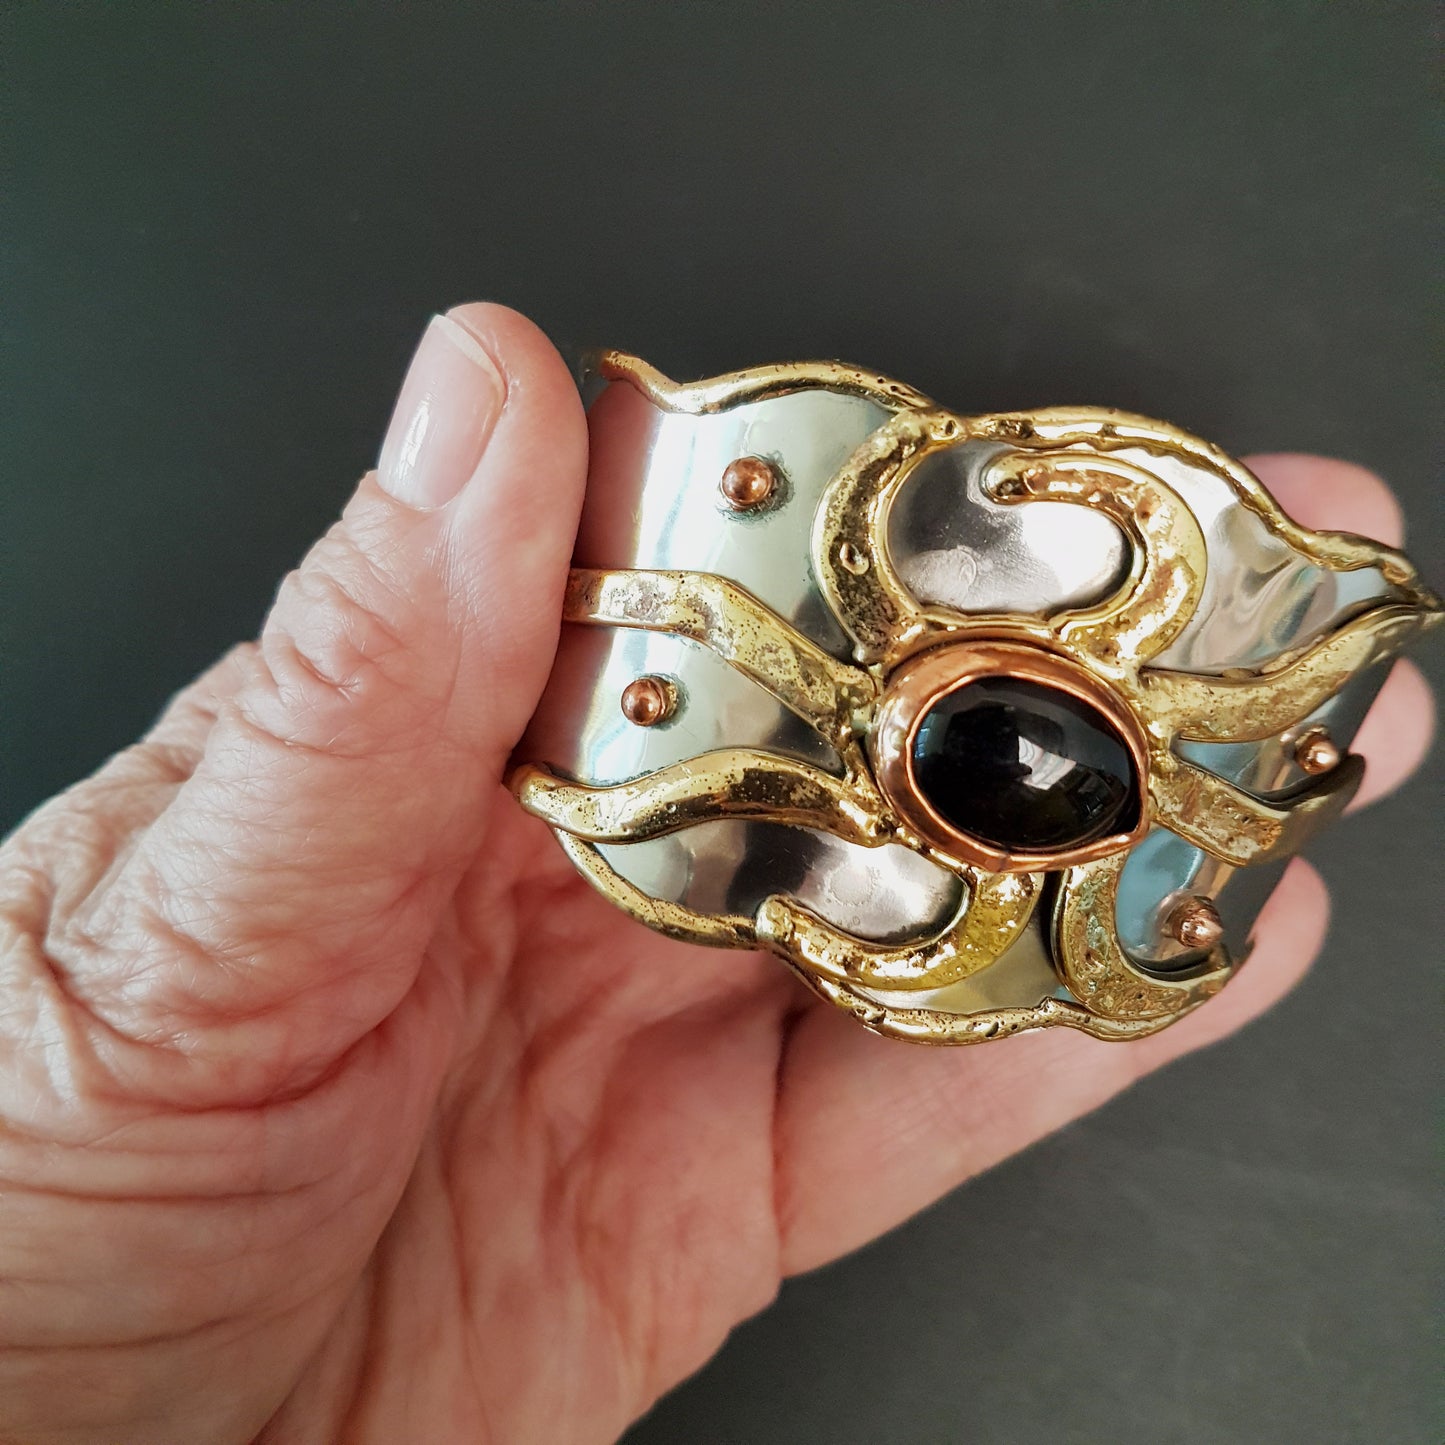 Silver cuff bracelet with inlaid gemstone center. Medieval Celtic sunrise design with brass detail. Vintage handwrought artisan metalwork.